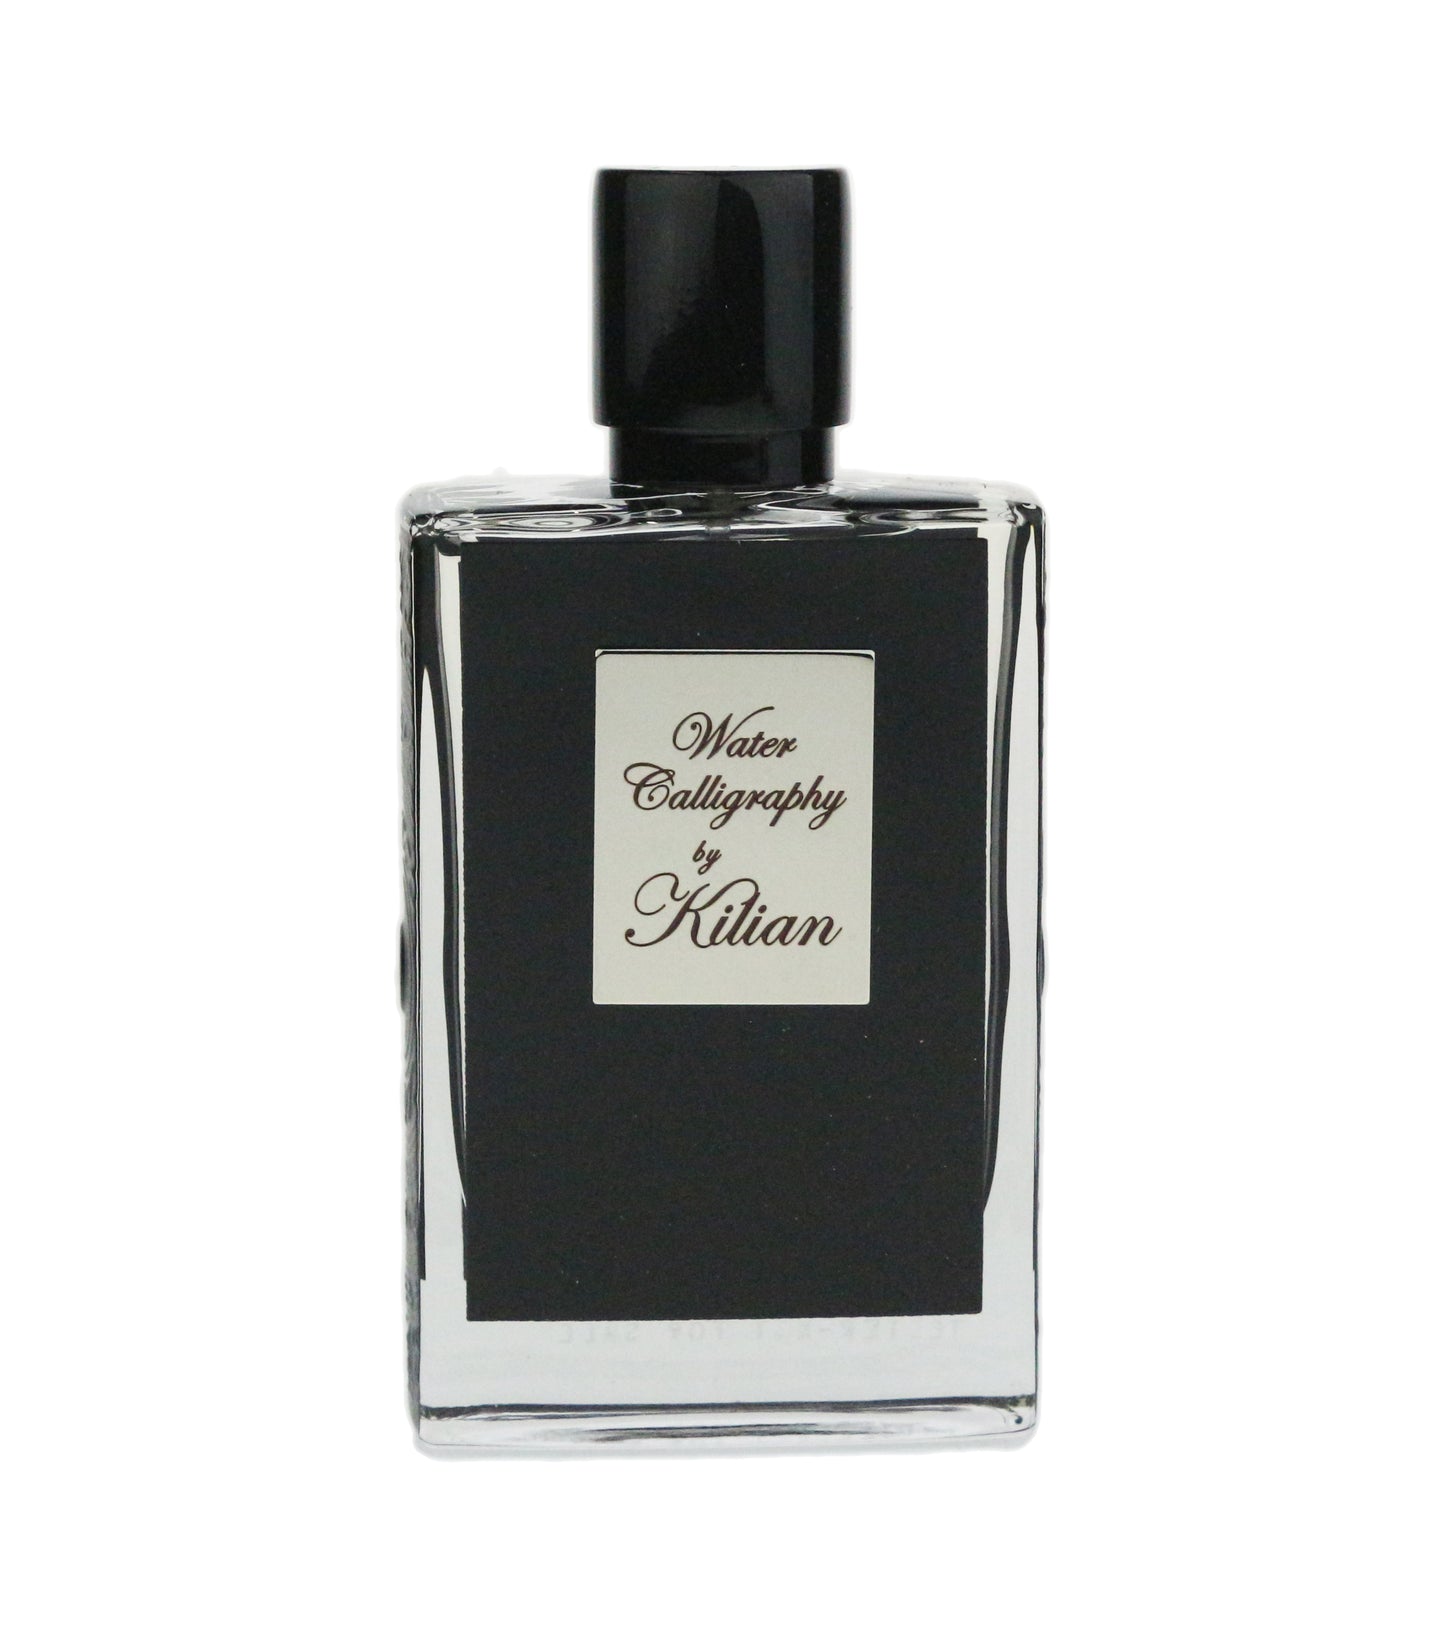 Kilian 'Water Calligraphy' Eau De Parfum 0.5oz/15ml Spray New